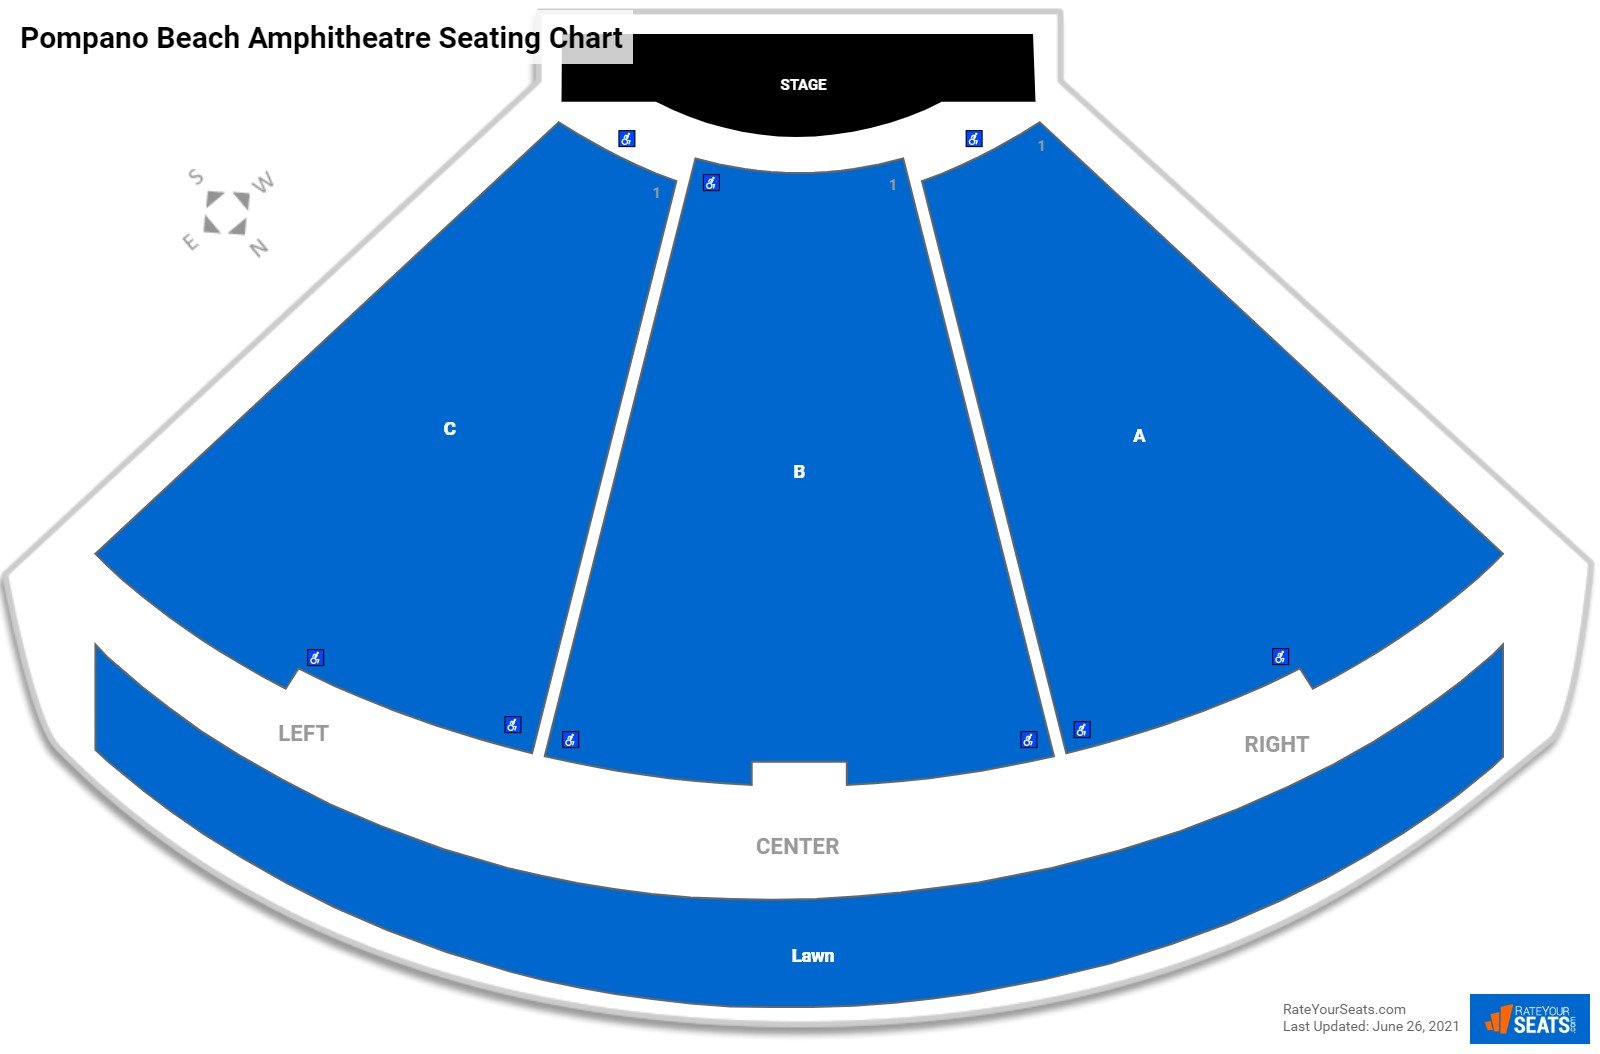 Pompano Beach Amphitheatre Concert Seating Chart